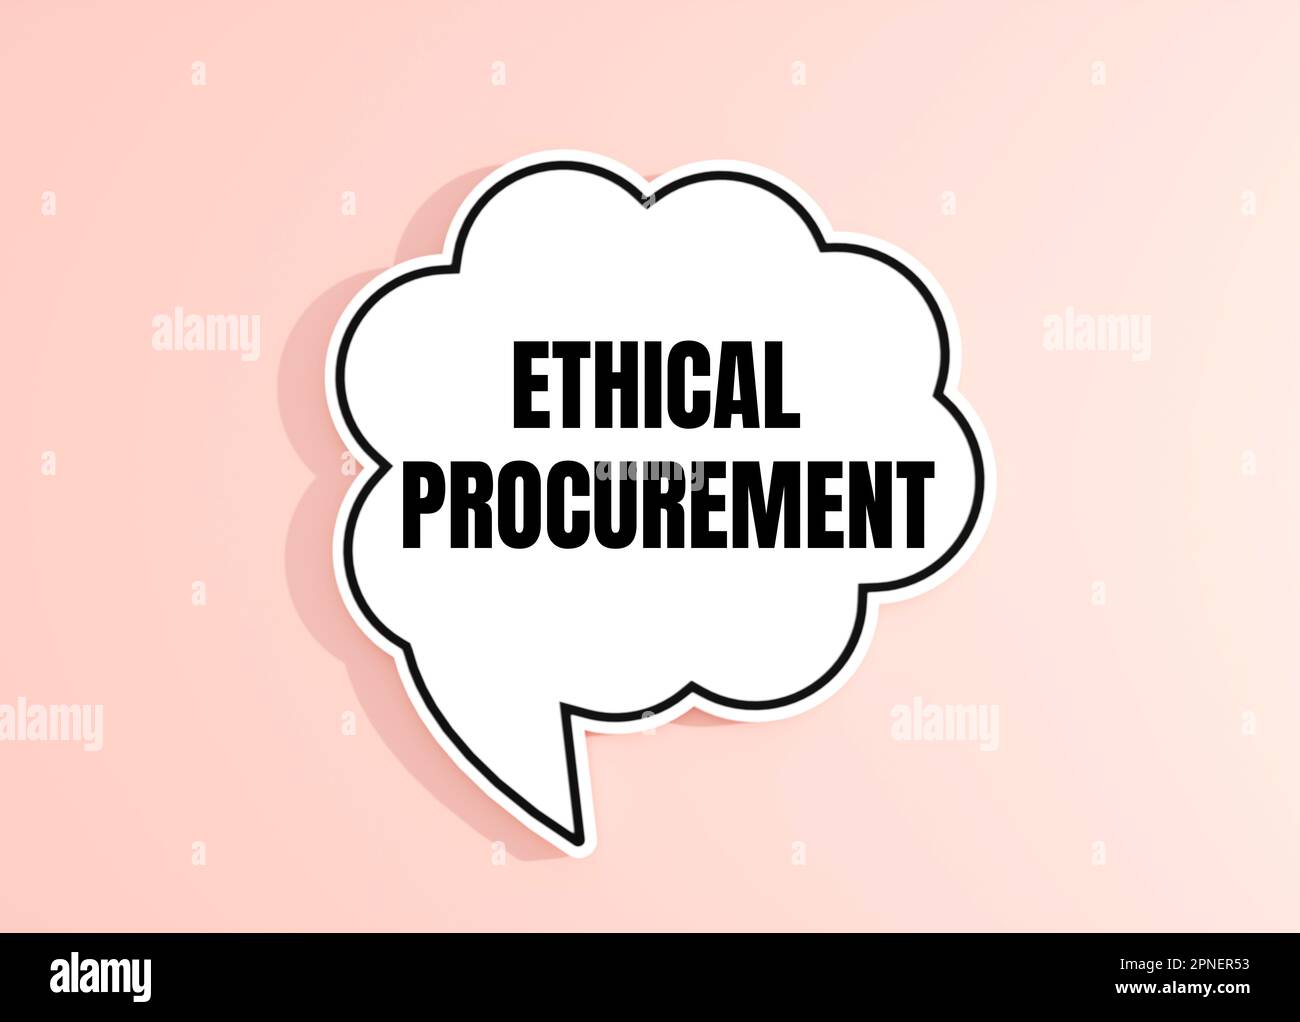 ethical procurement Stock Photo